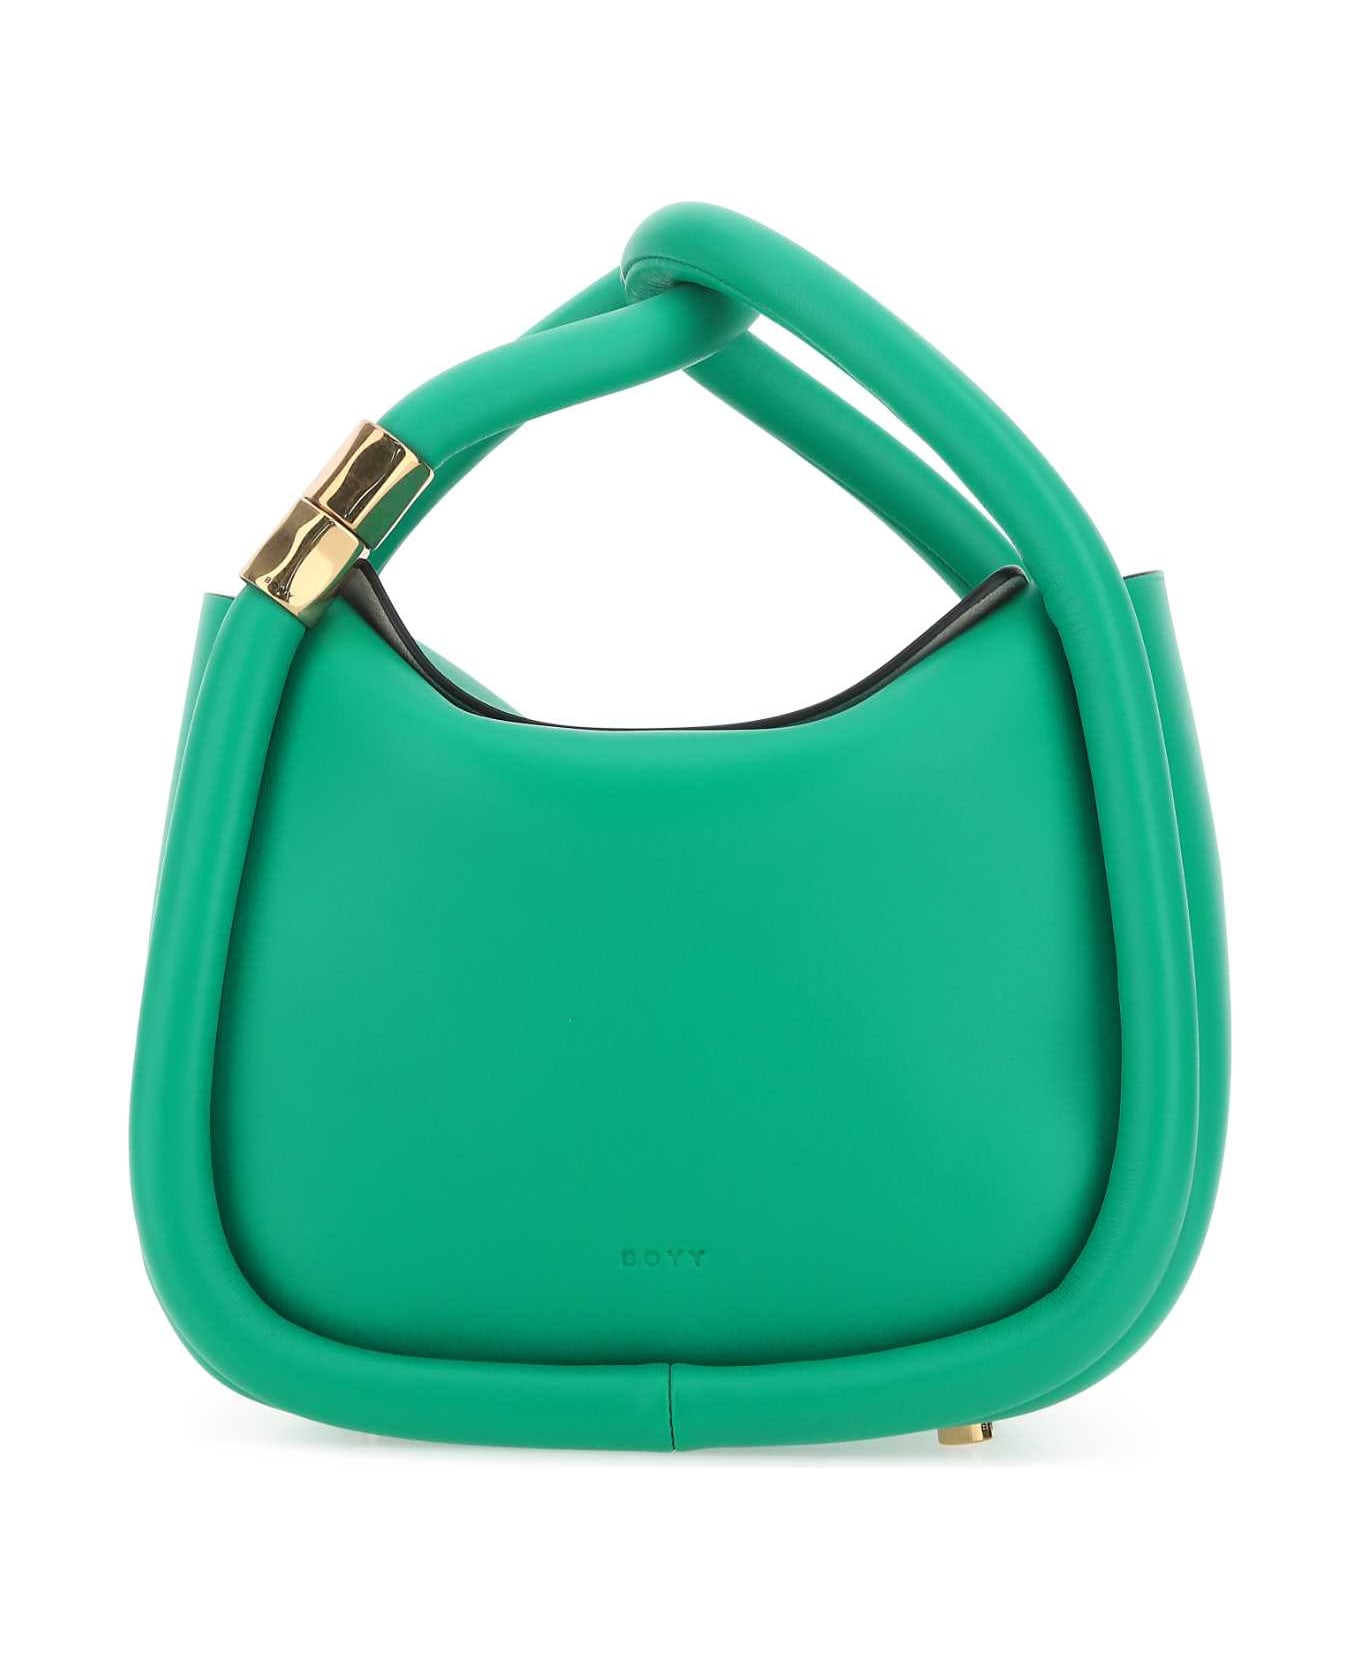 BOYY Green Leather Wonton 20 Handbag - EMERALD